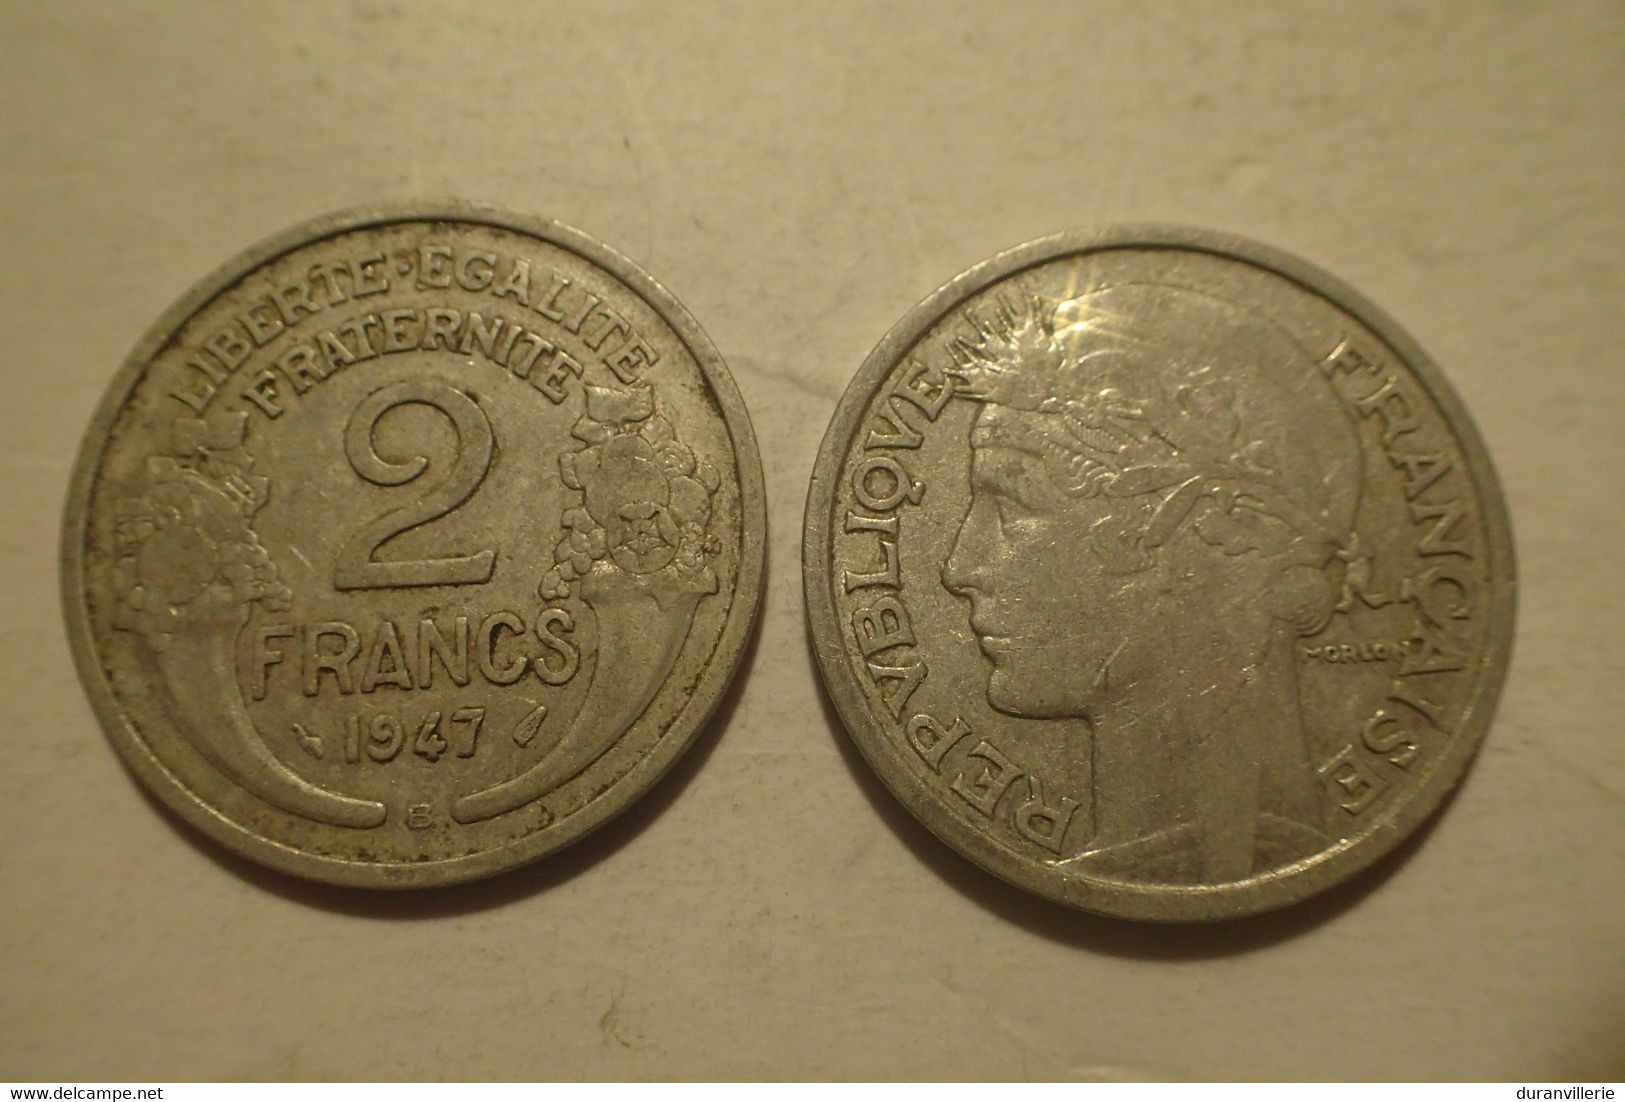 1947 - France - 2 FRANCS, (B), Morlon, IVè République, Aluminium, KM 886 - 2 Francs